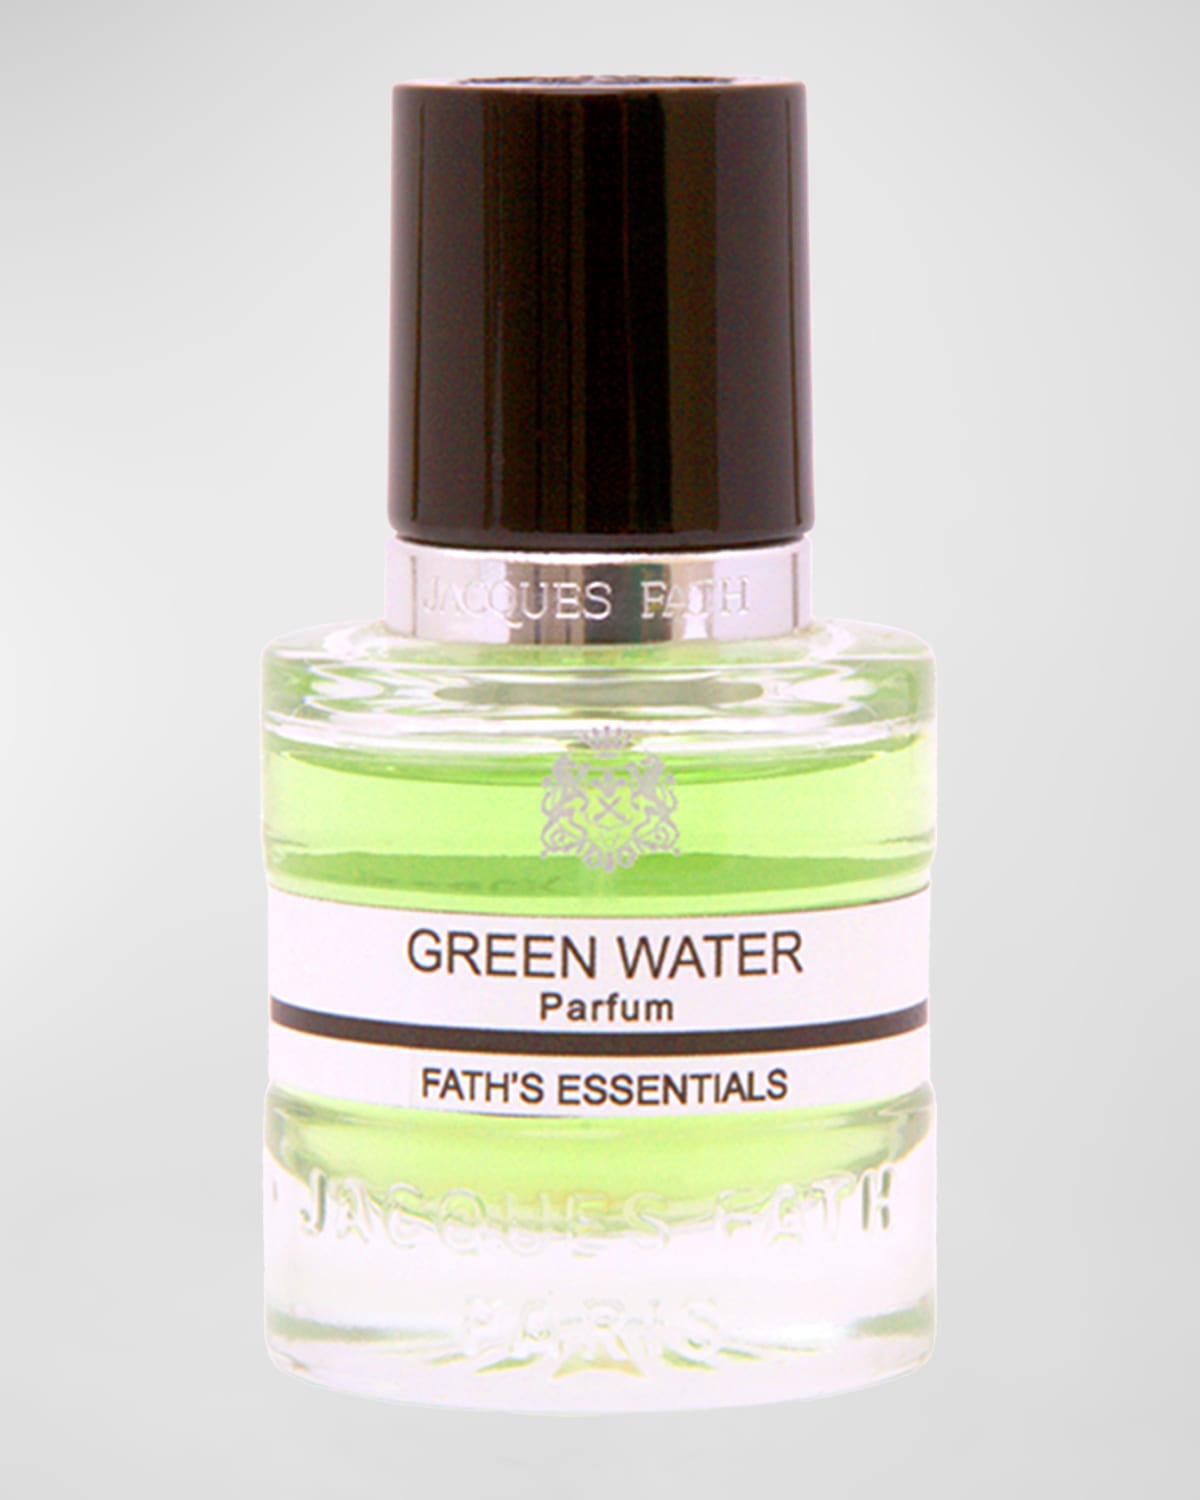 Jacques Fath 0.5 oz. Green Water Natural Parfum Spray